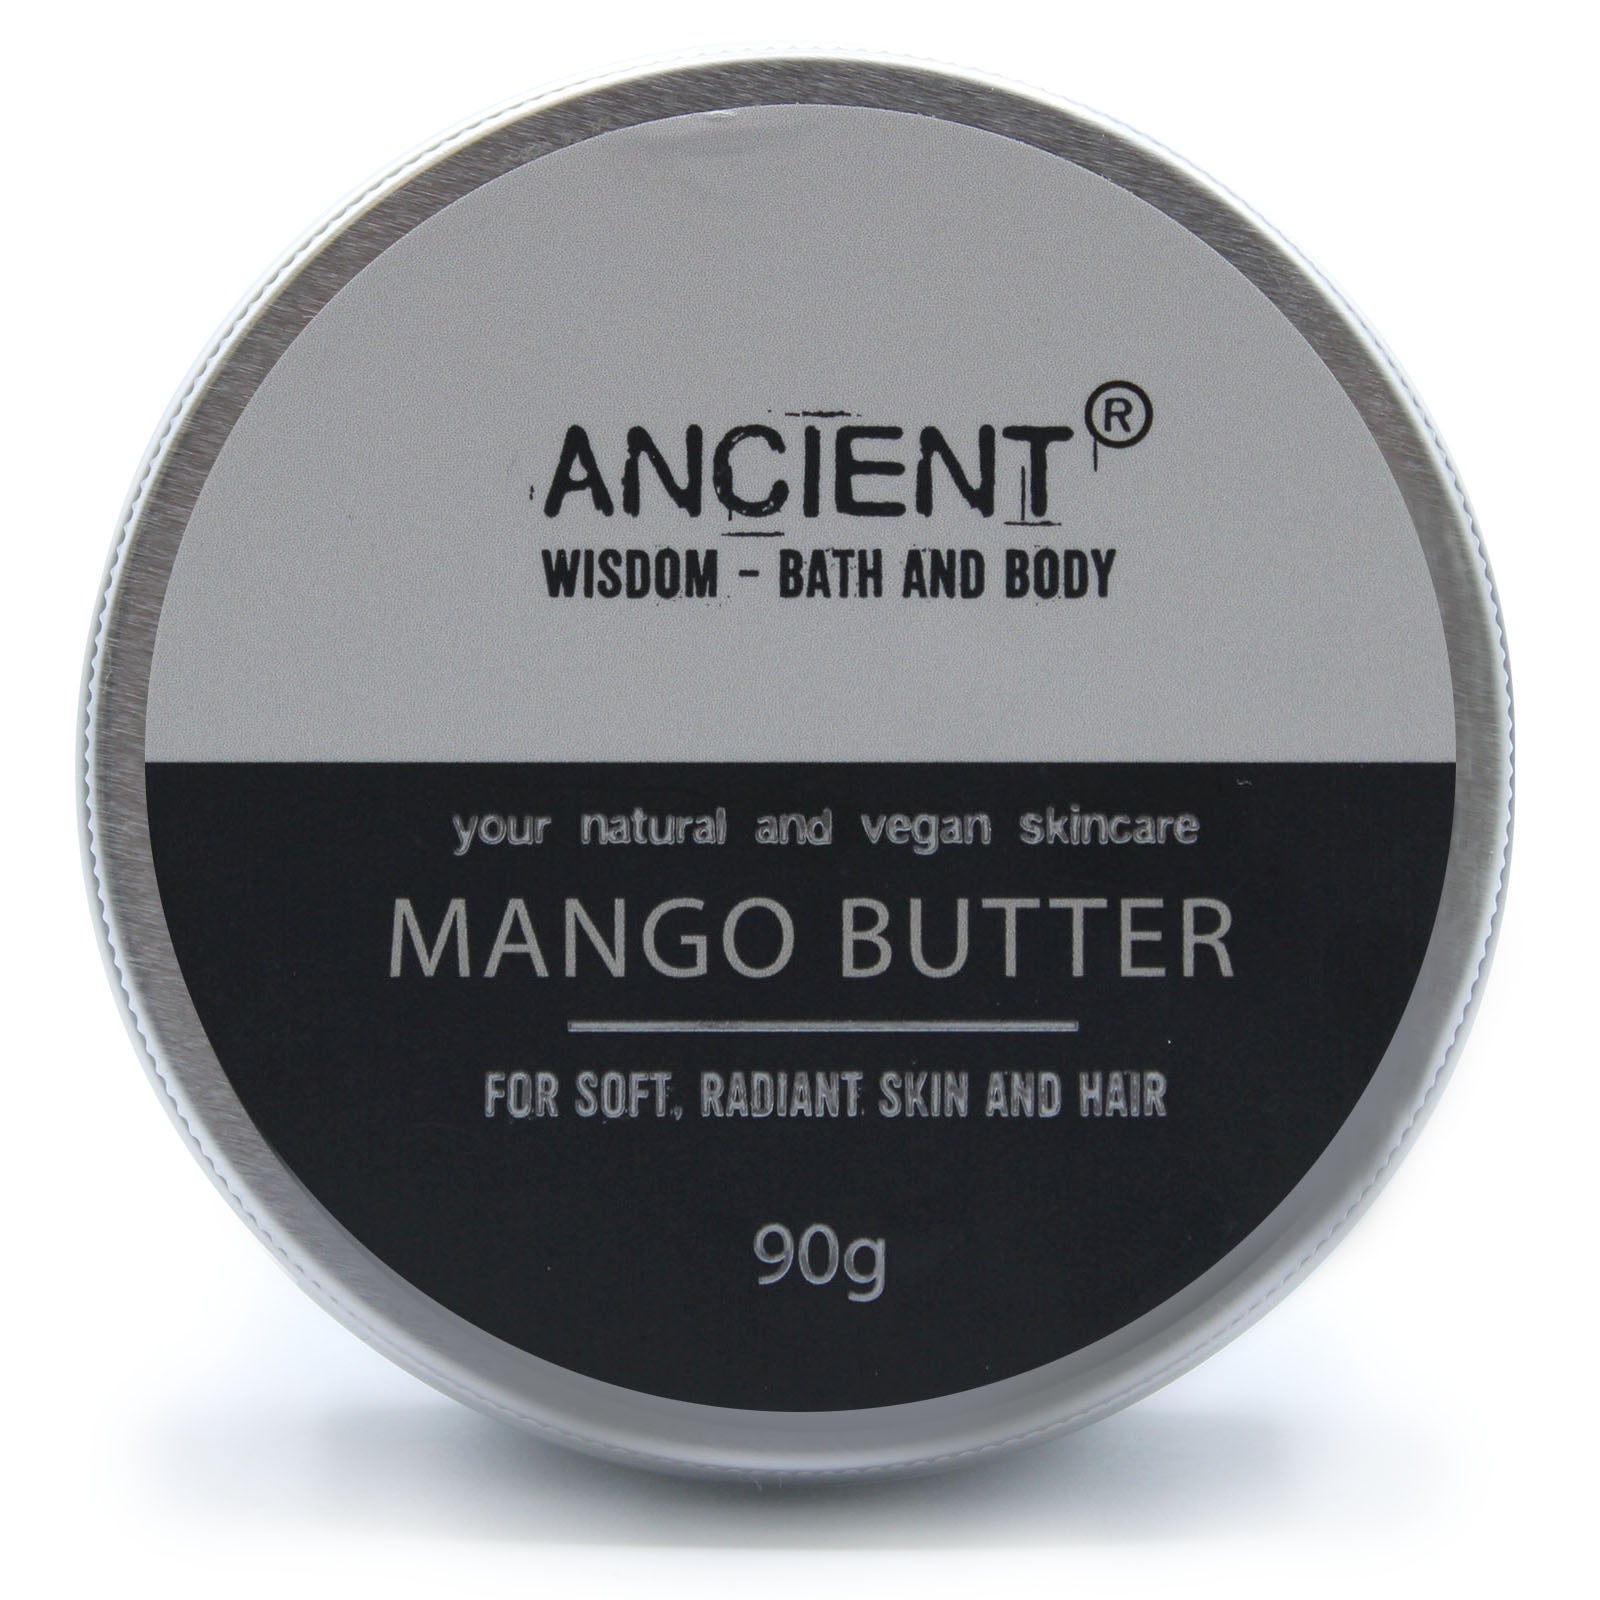 View Pure Body Butter 90g Mango Butter information